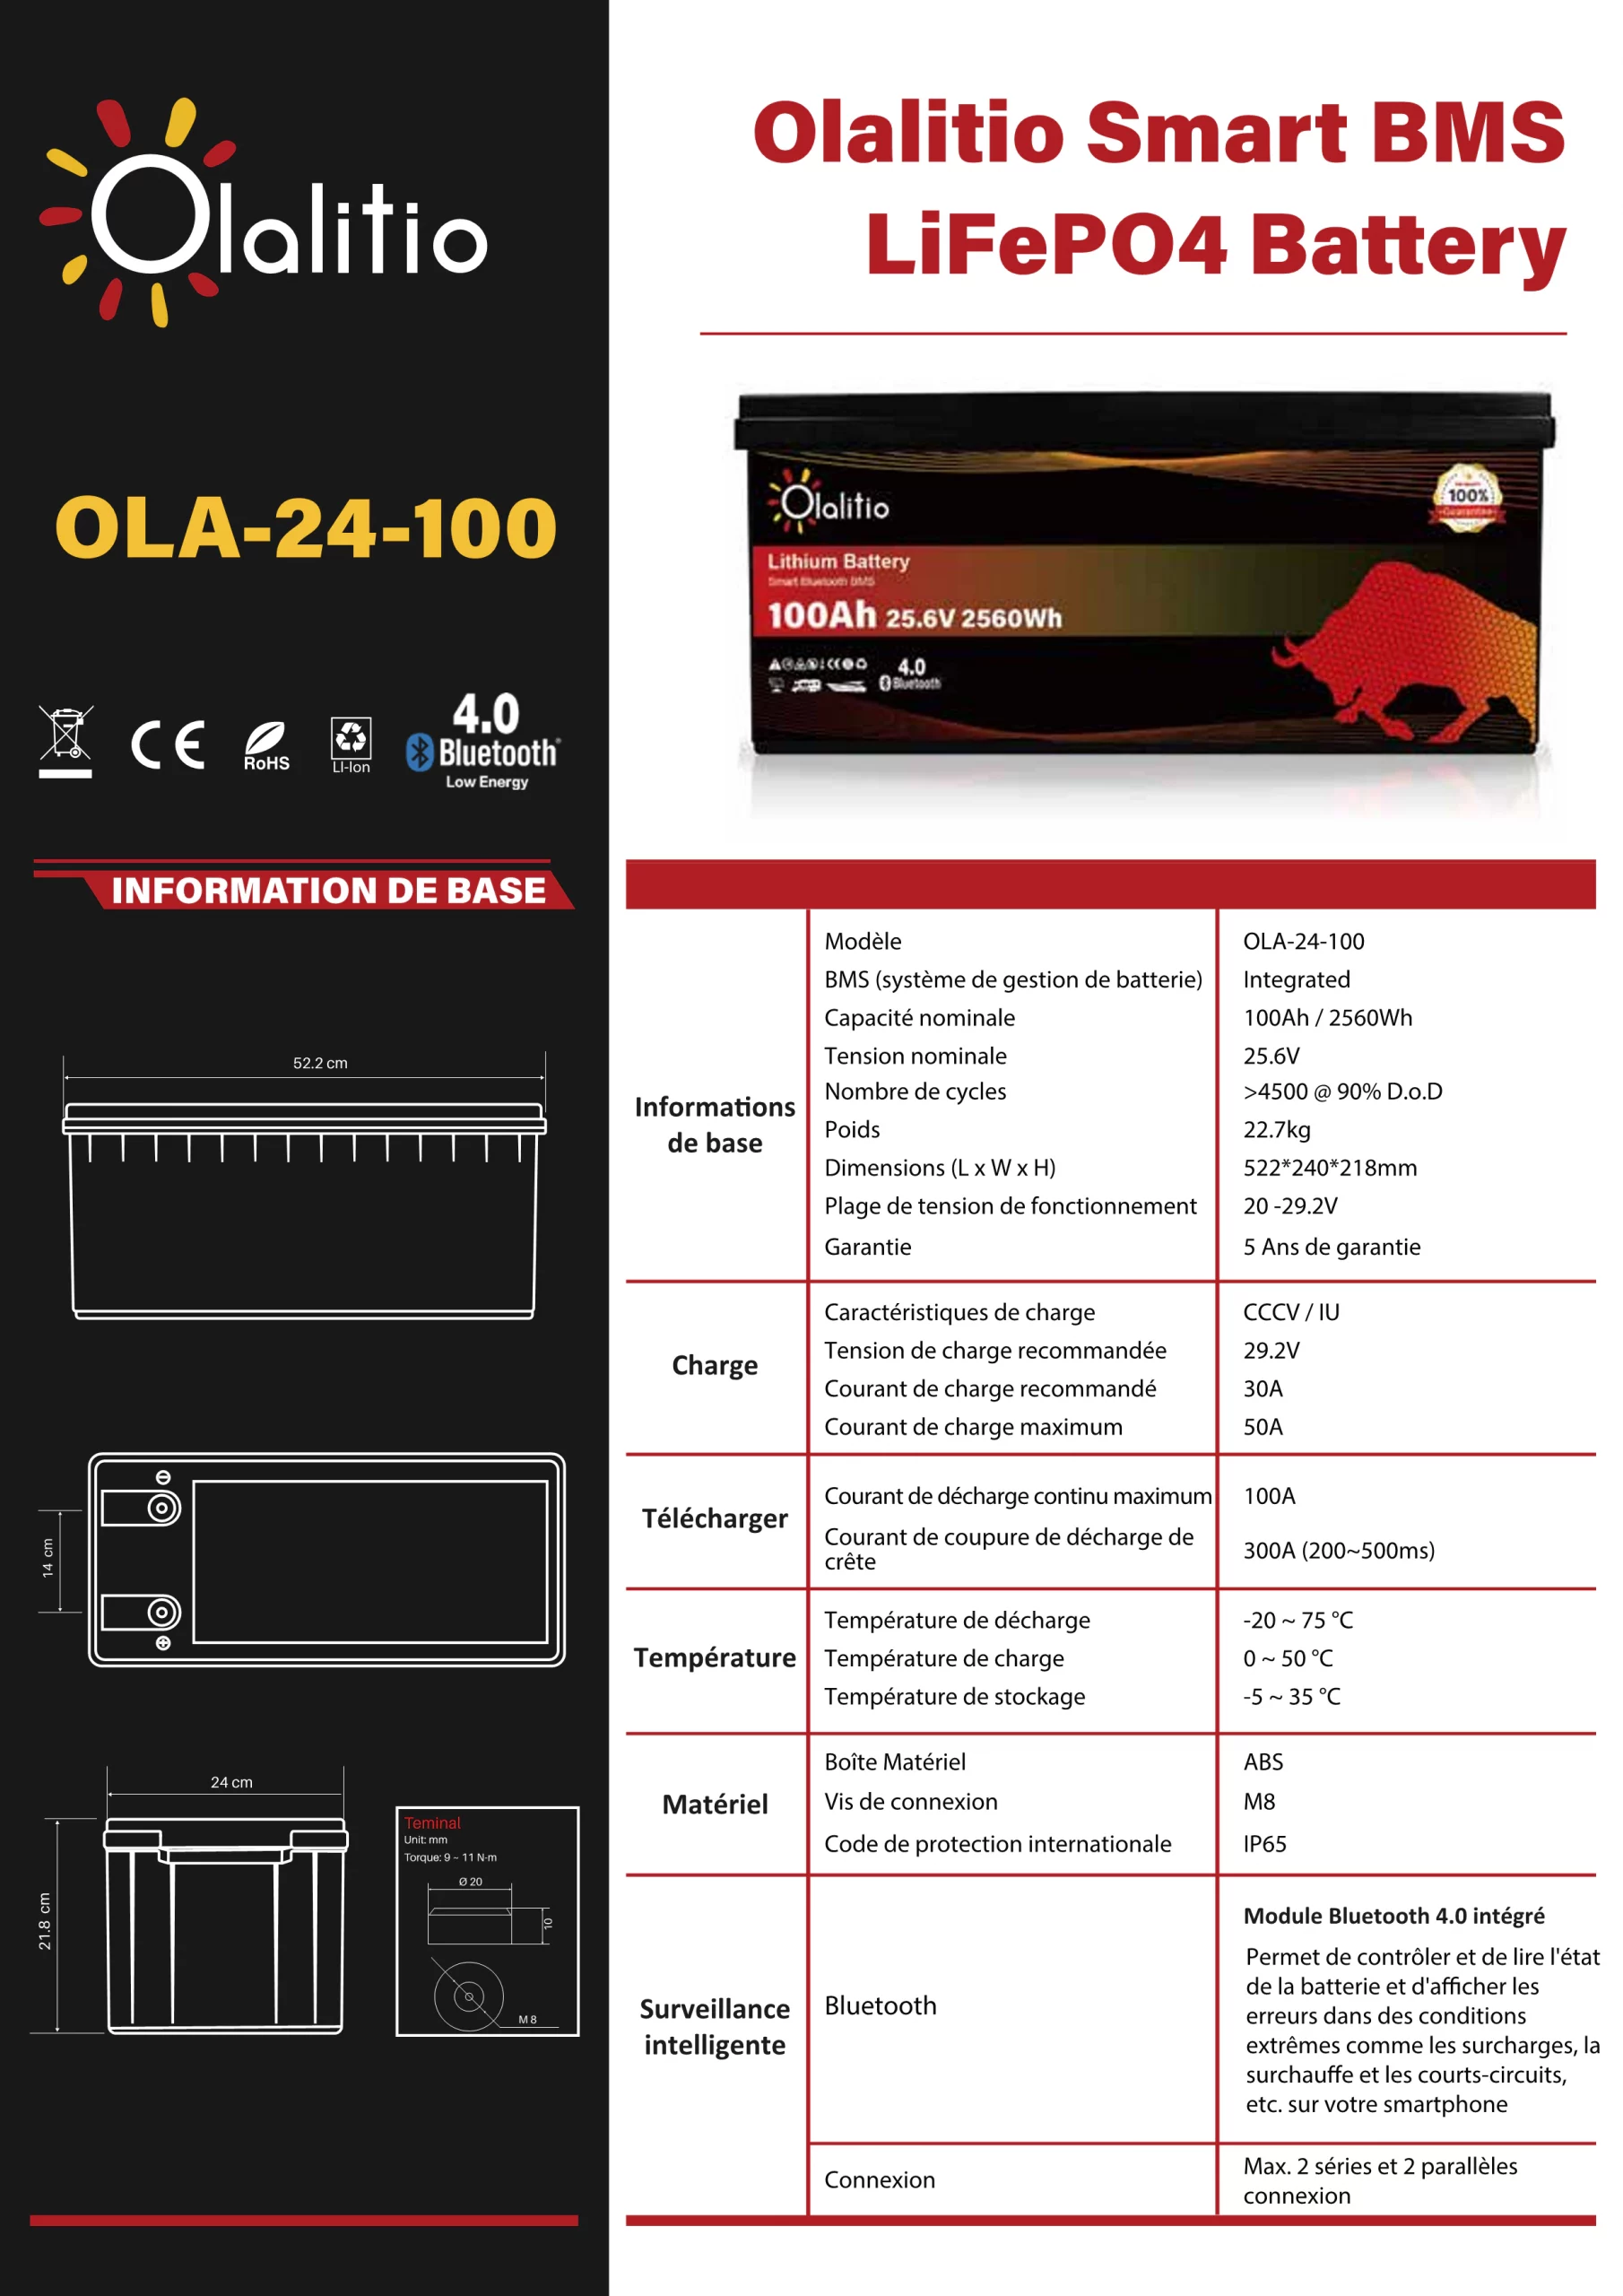 OLA-24-100-Fiche technique - Olalitio-Lihtium-Battery-24V100Ah-FR_1